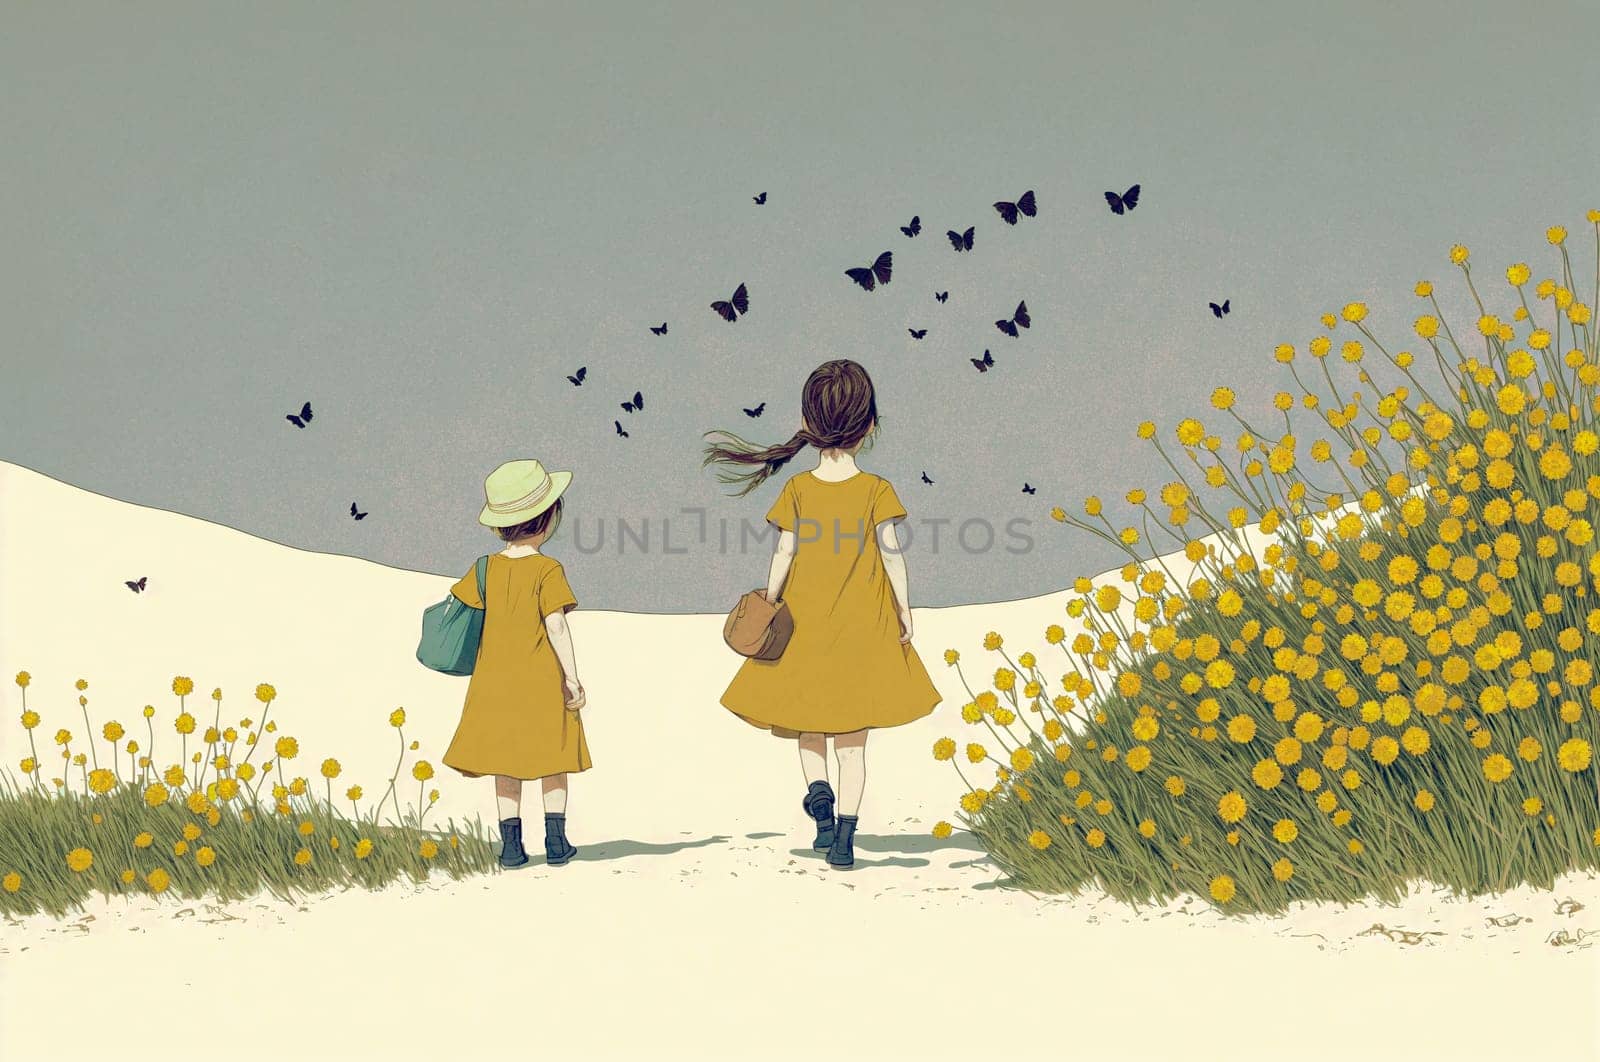 Two children in yellow dresses walking towards a swarm of butterflies on a dune near the beach by chrisroll